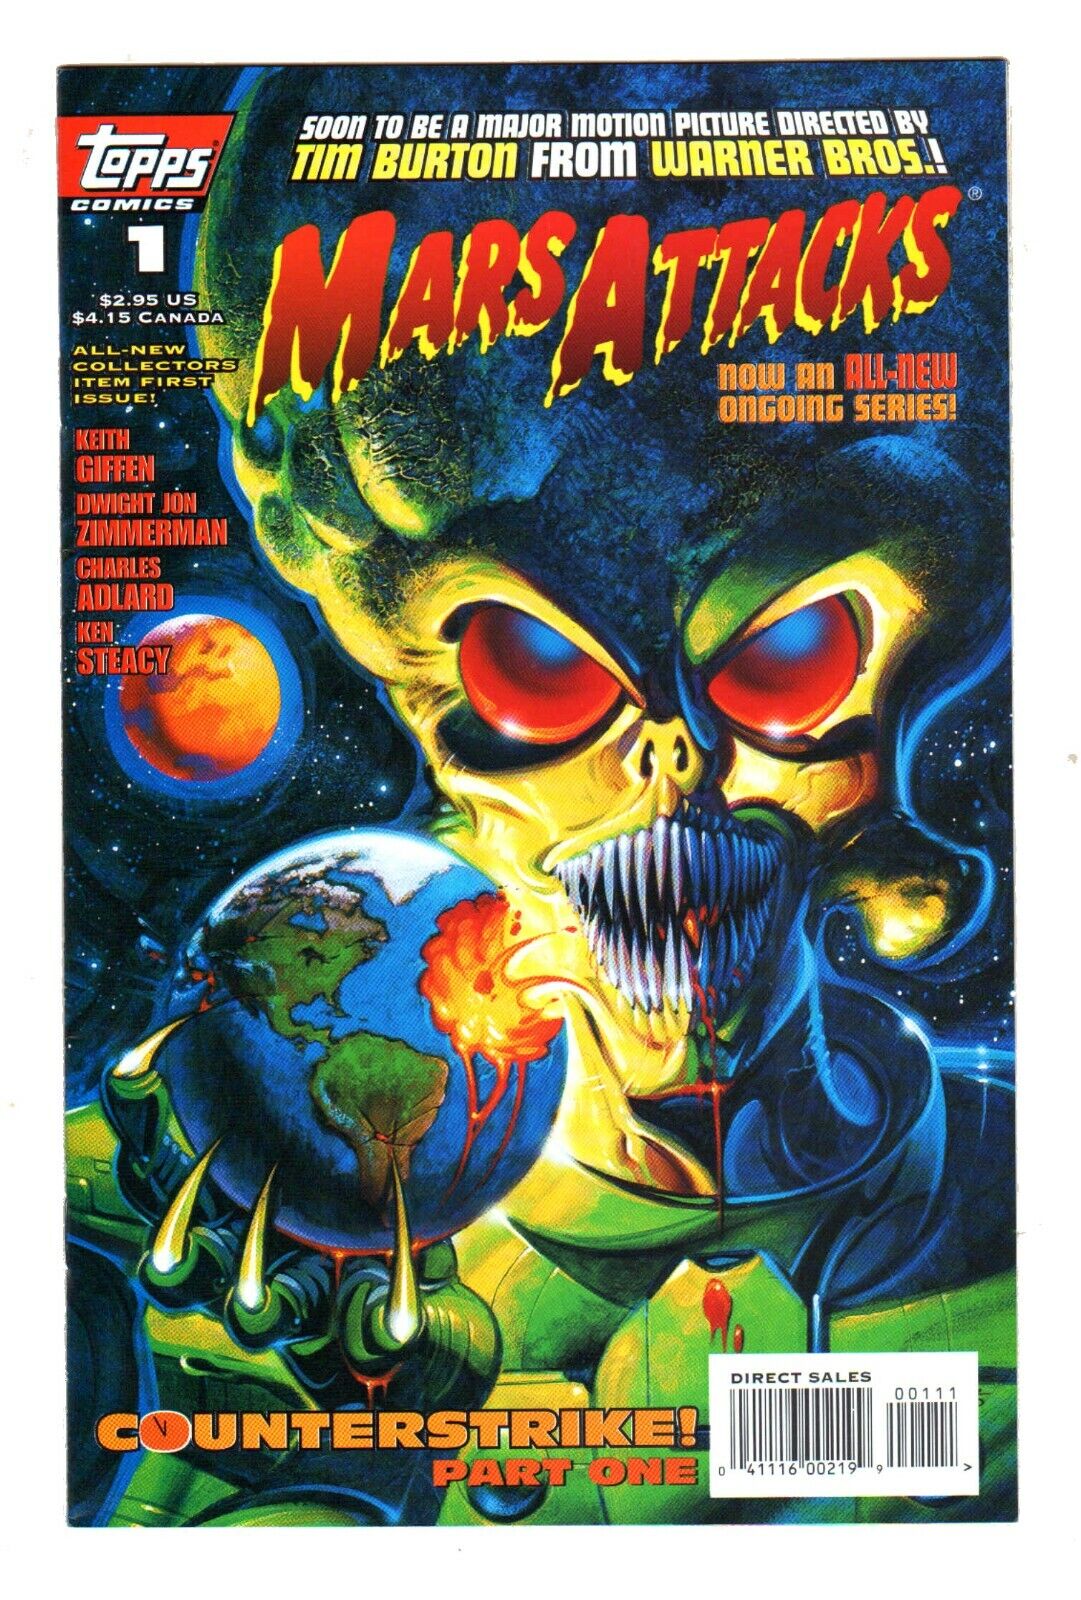 Aug 1995 Mars Attacks #1 (Vol 2 No 1) Second Series